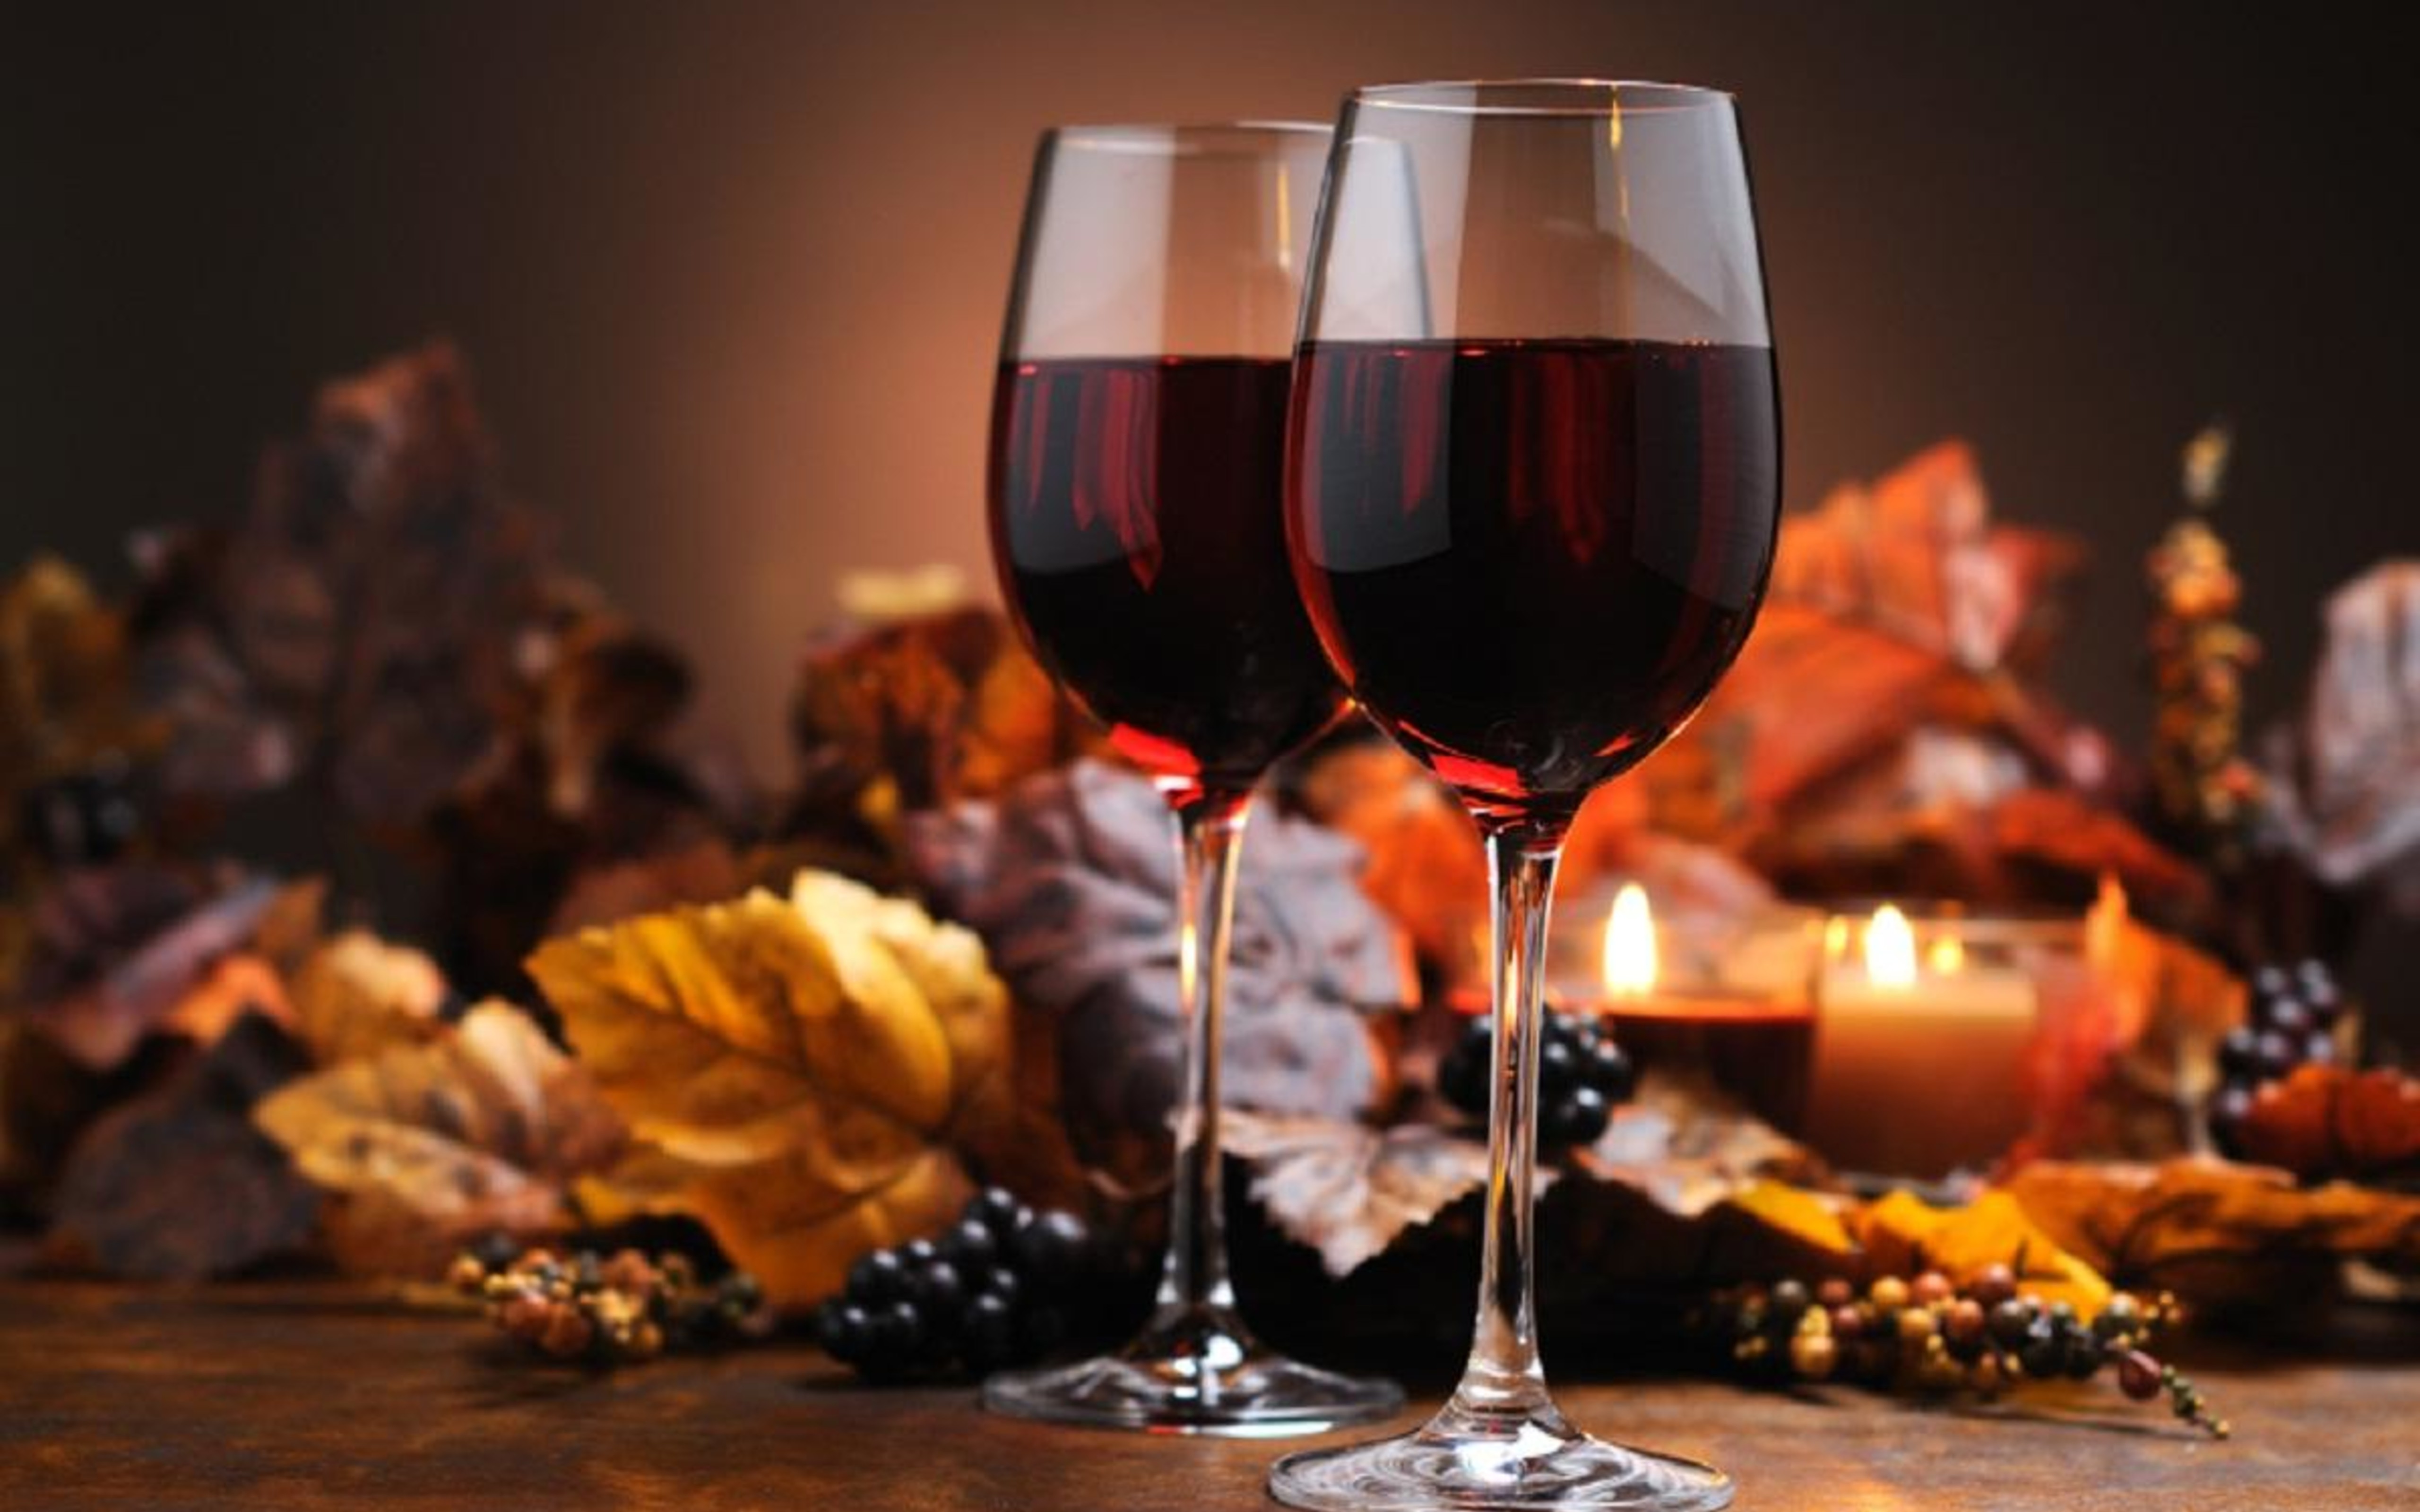 Картинку вине. Бокал с вином. Красное вино в бокале. Вино осень. Бокал красного вина.